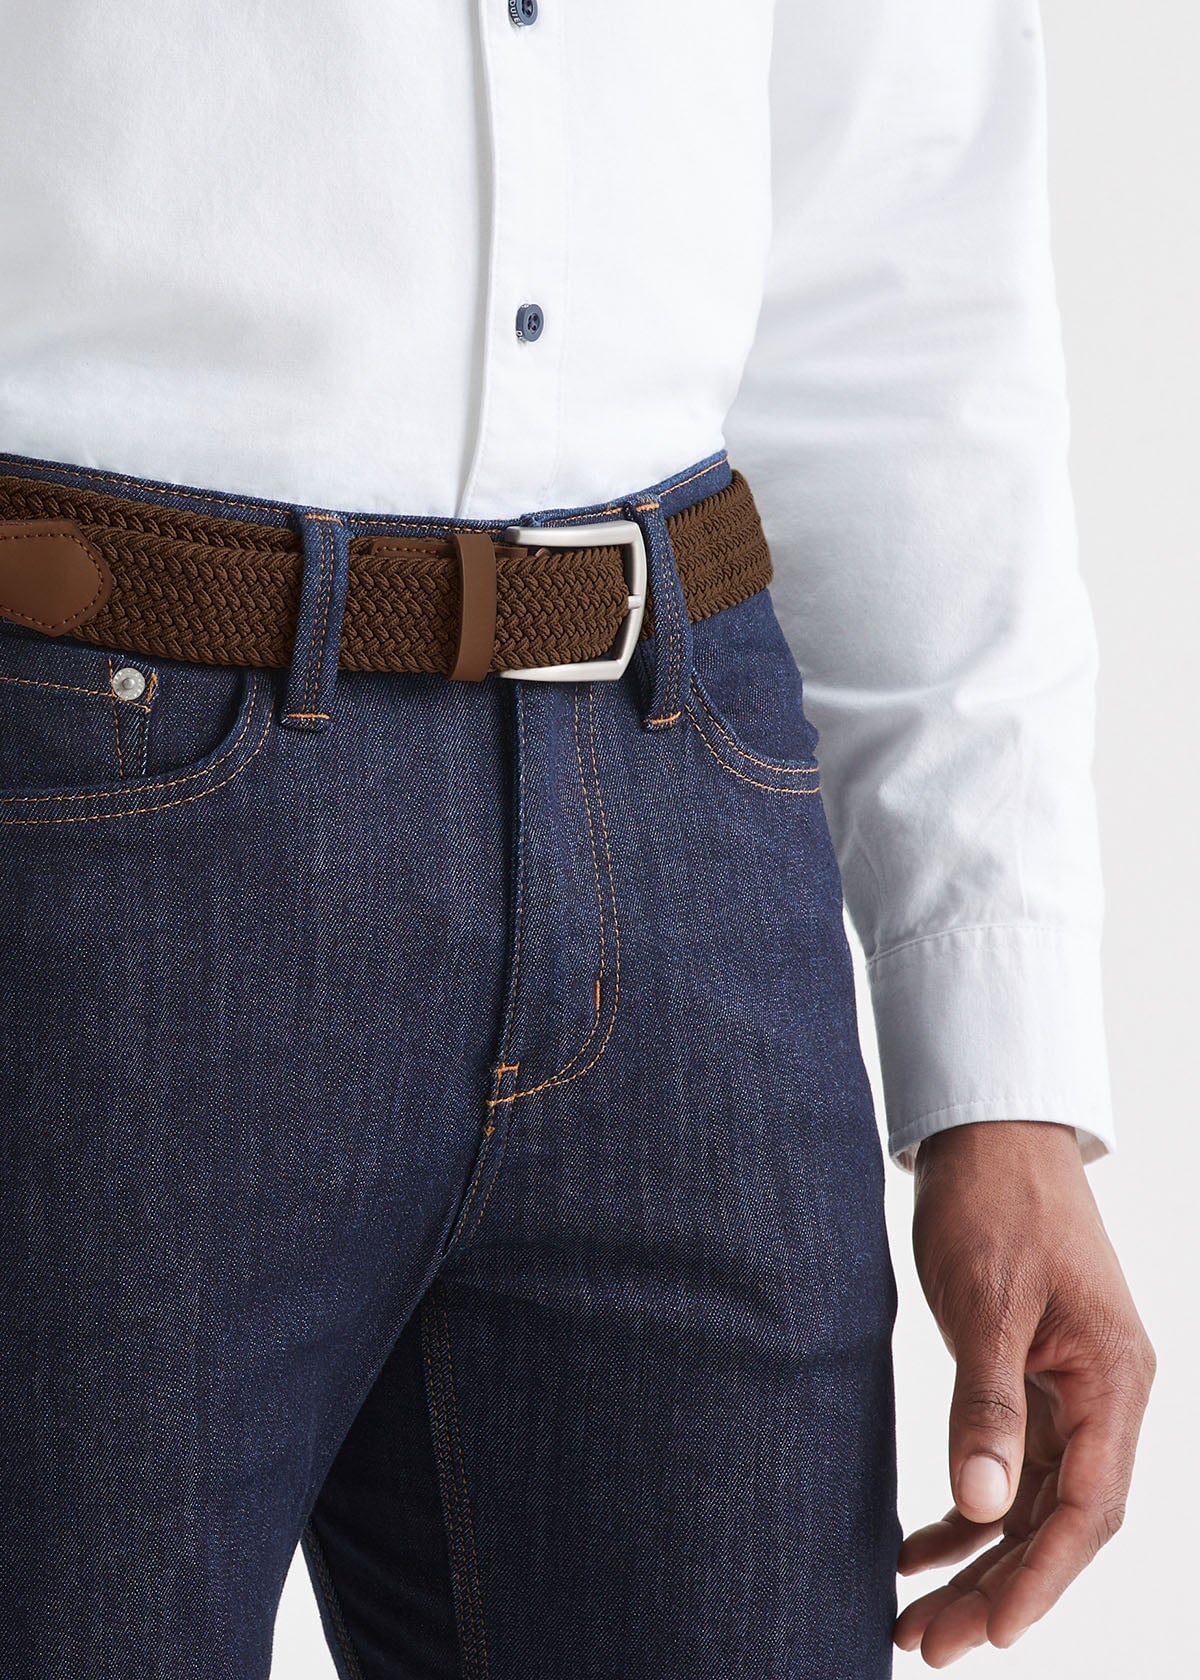 Men's Brighton Toronto Taper Leather Belt Brown #10707 - Richard David for  Men